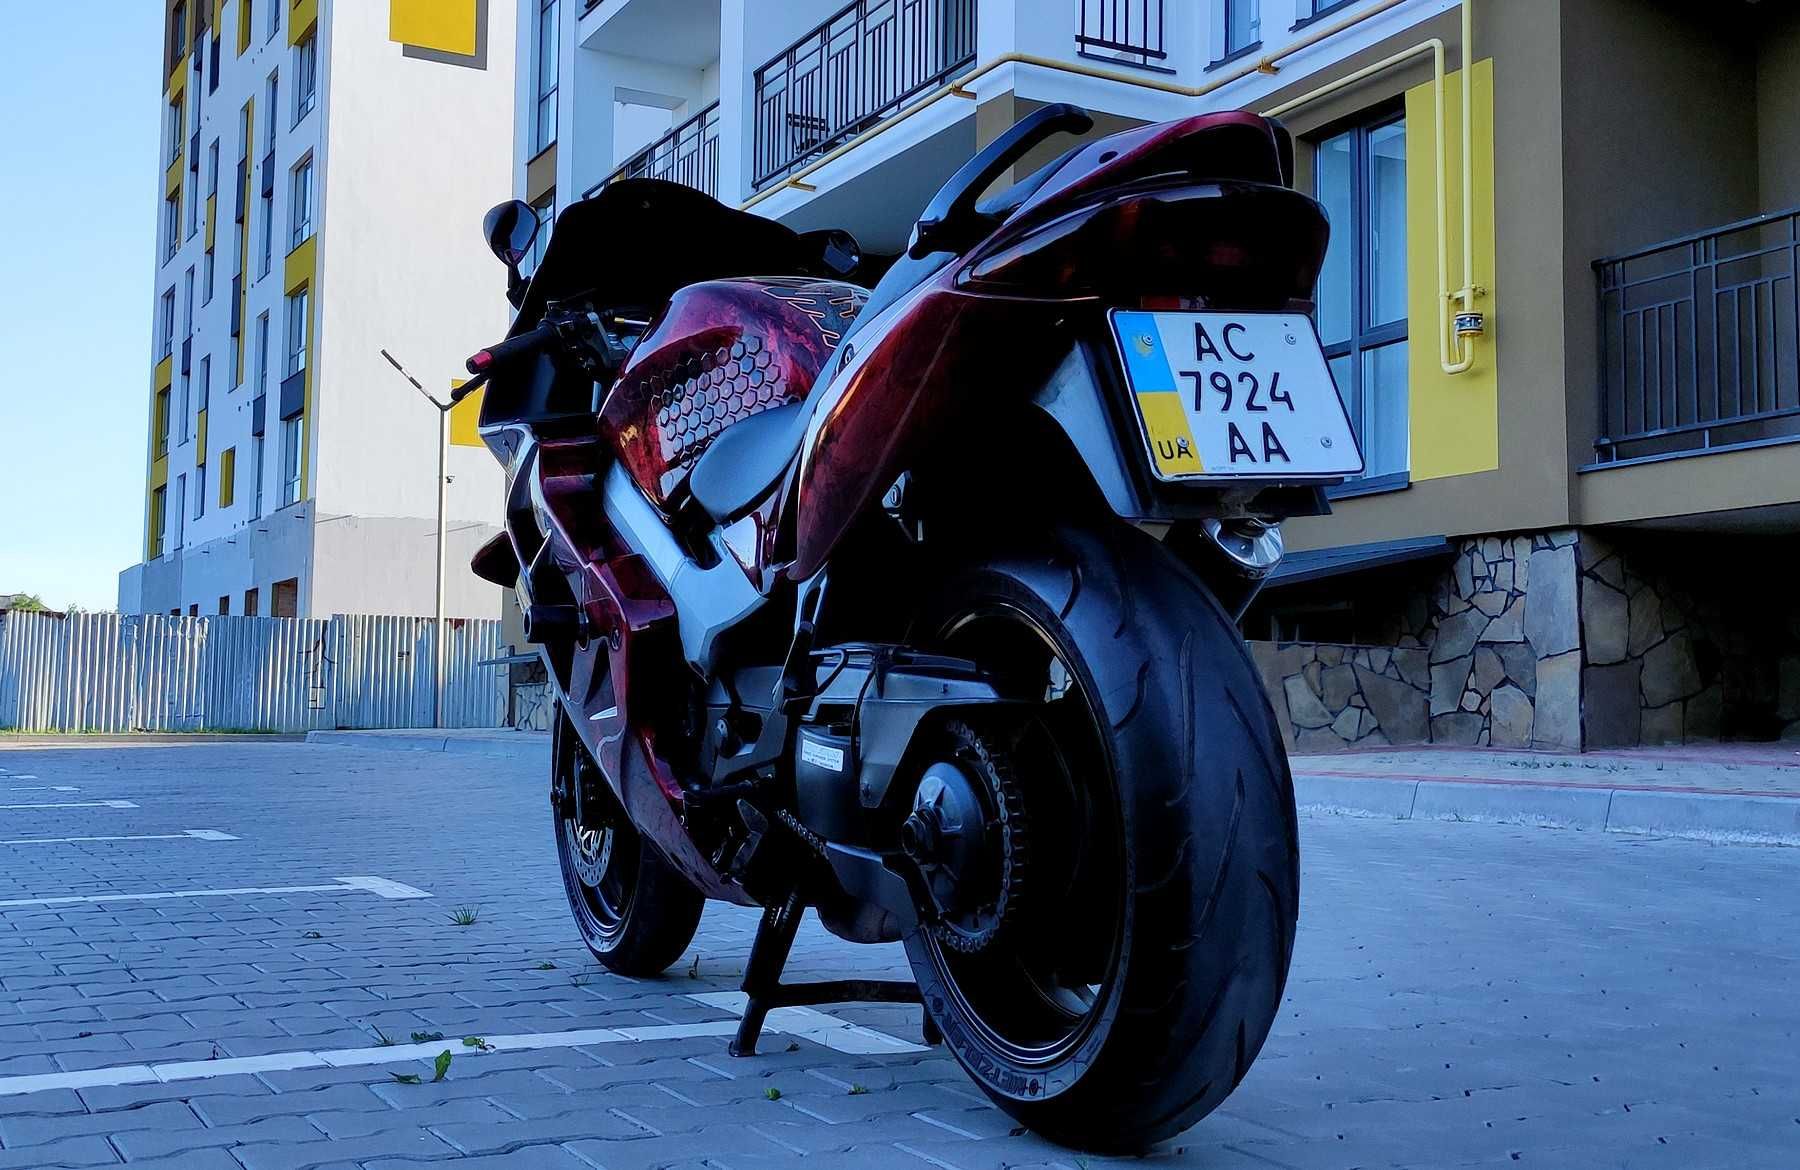 Мотоцикл Honda VFR 800 інжектор, мотор V4, 106 кc ексклюзивна покраска